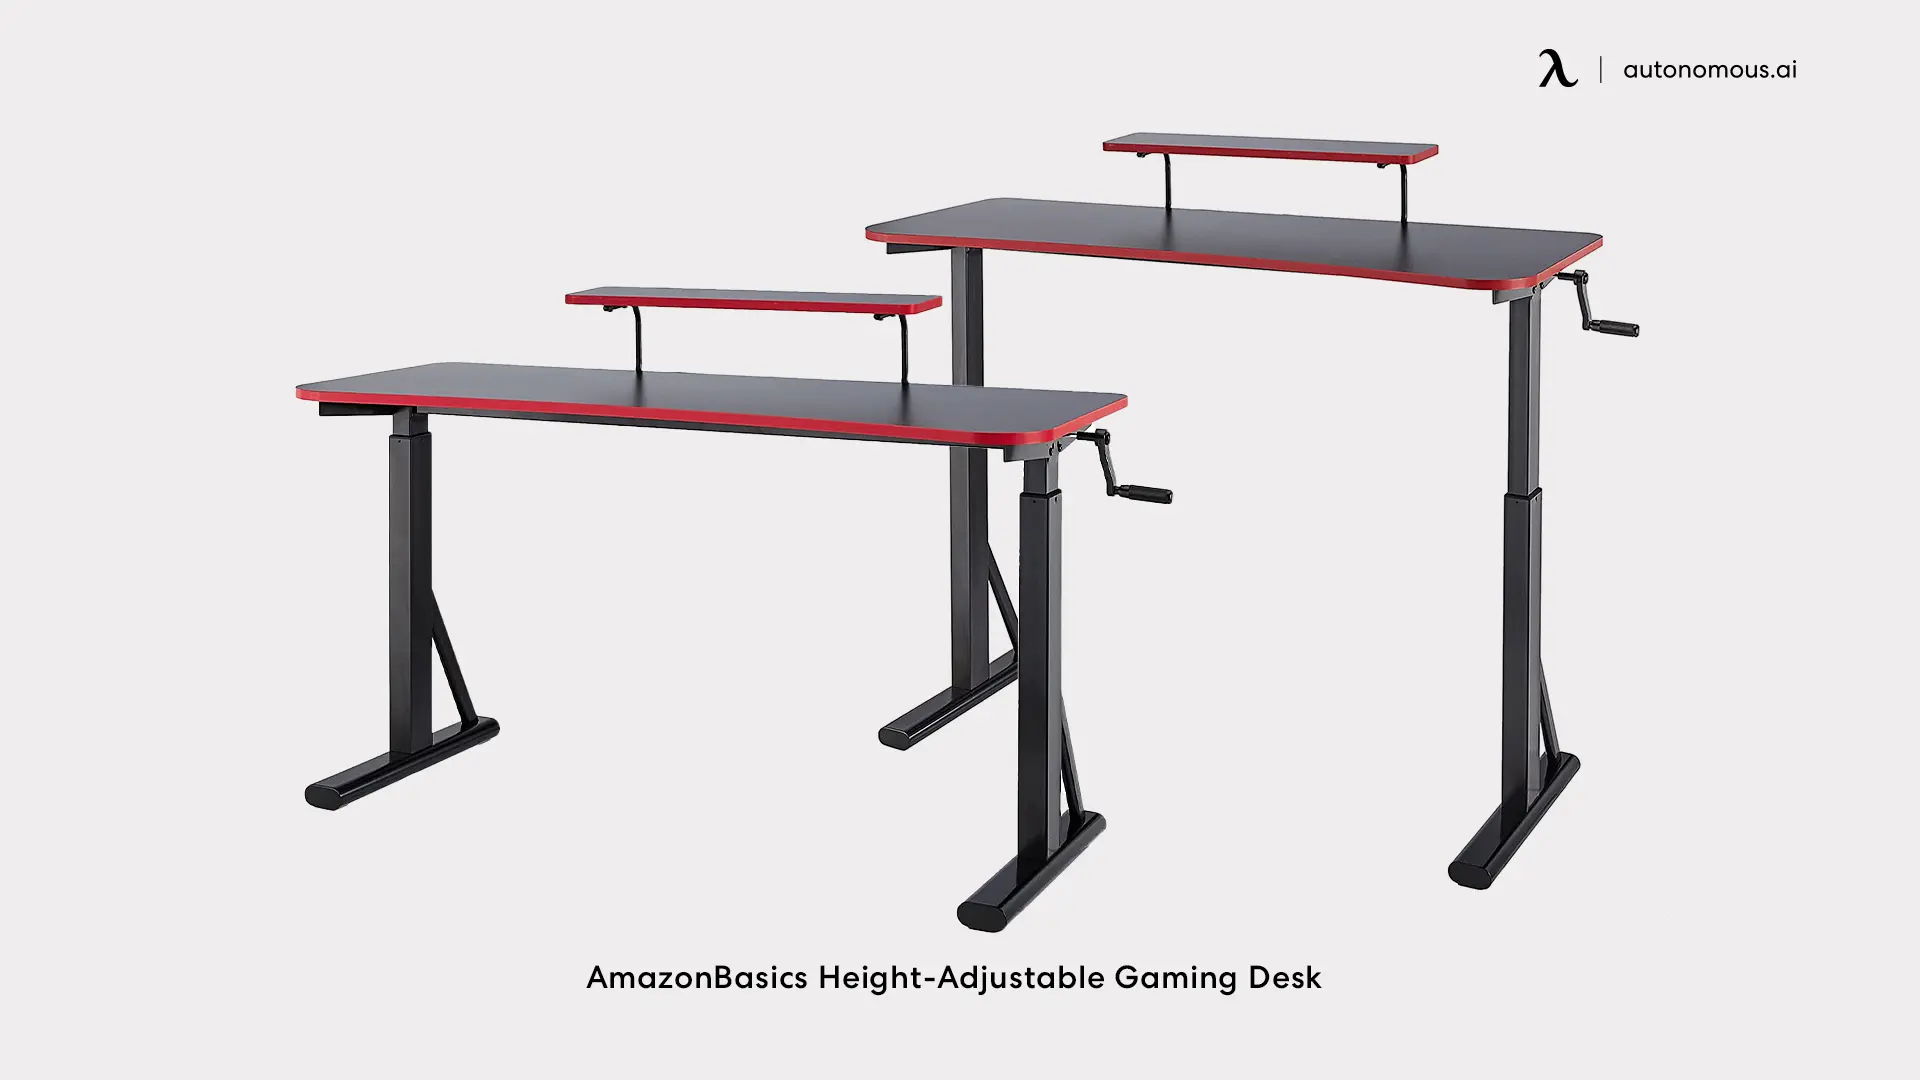 AmazonBasics Height-Adjustable Gaming Desk